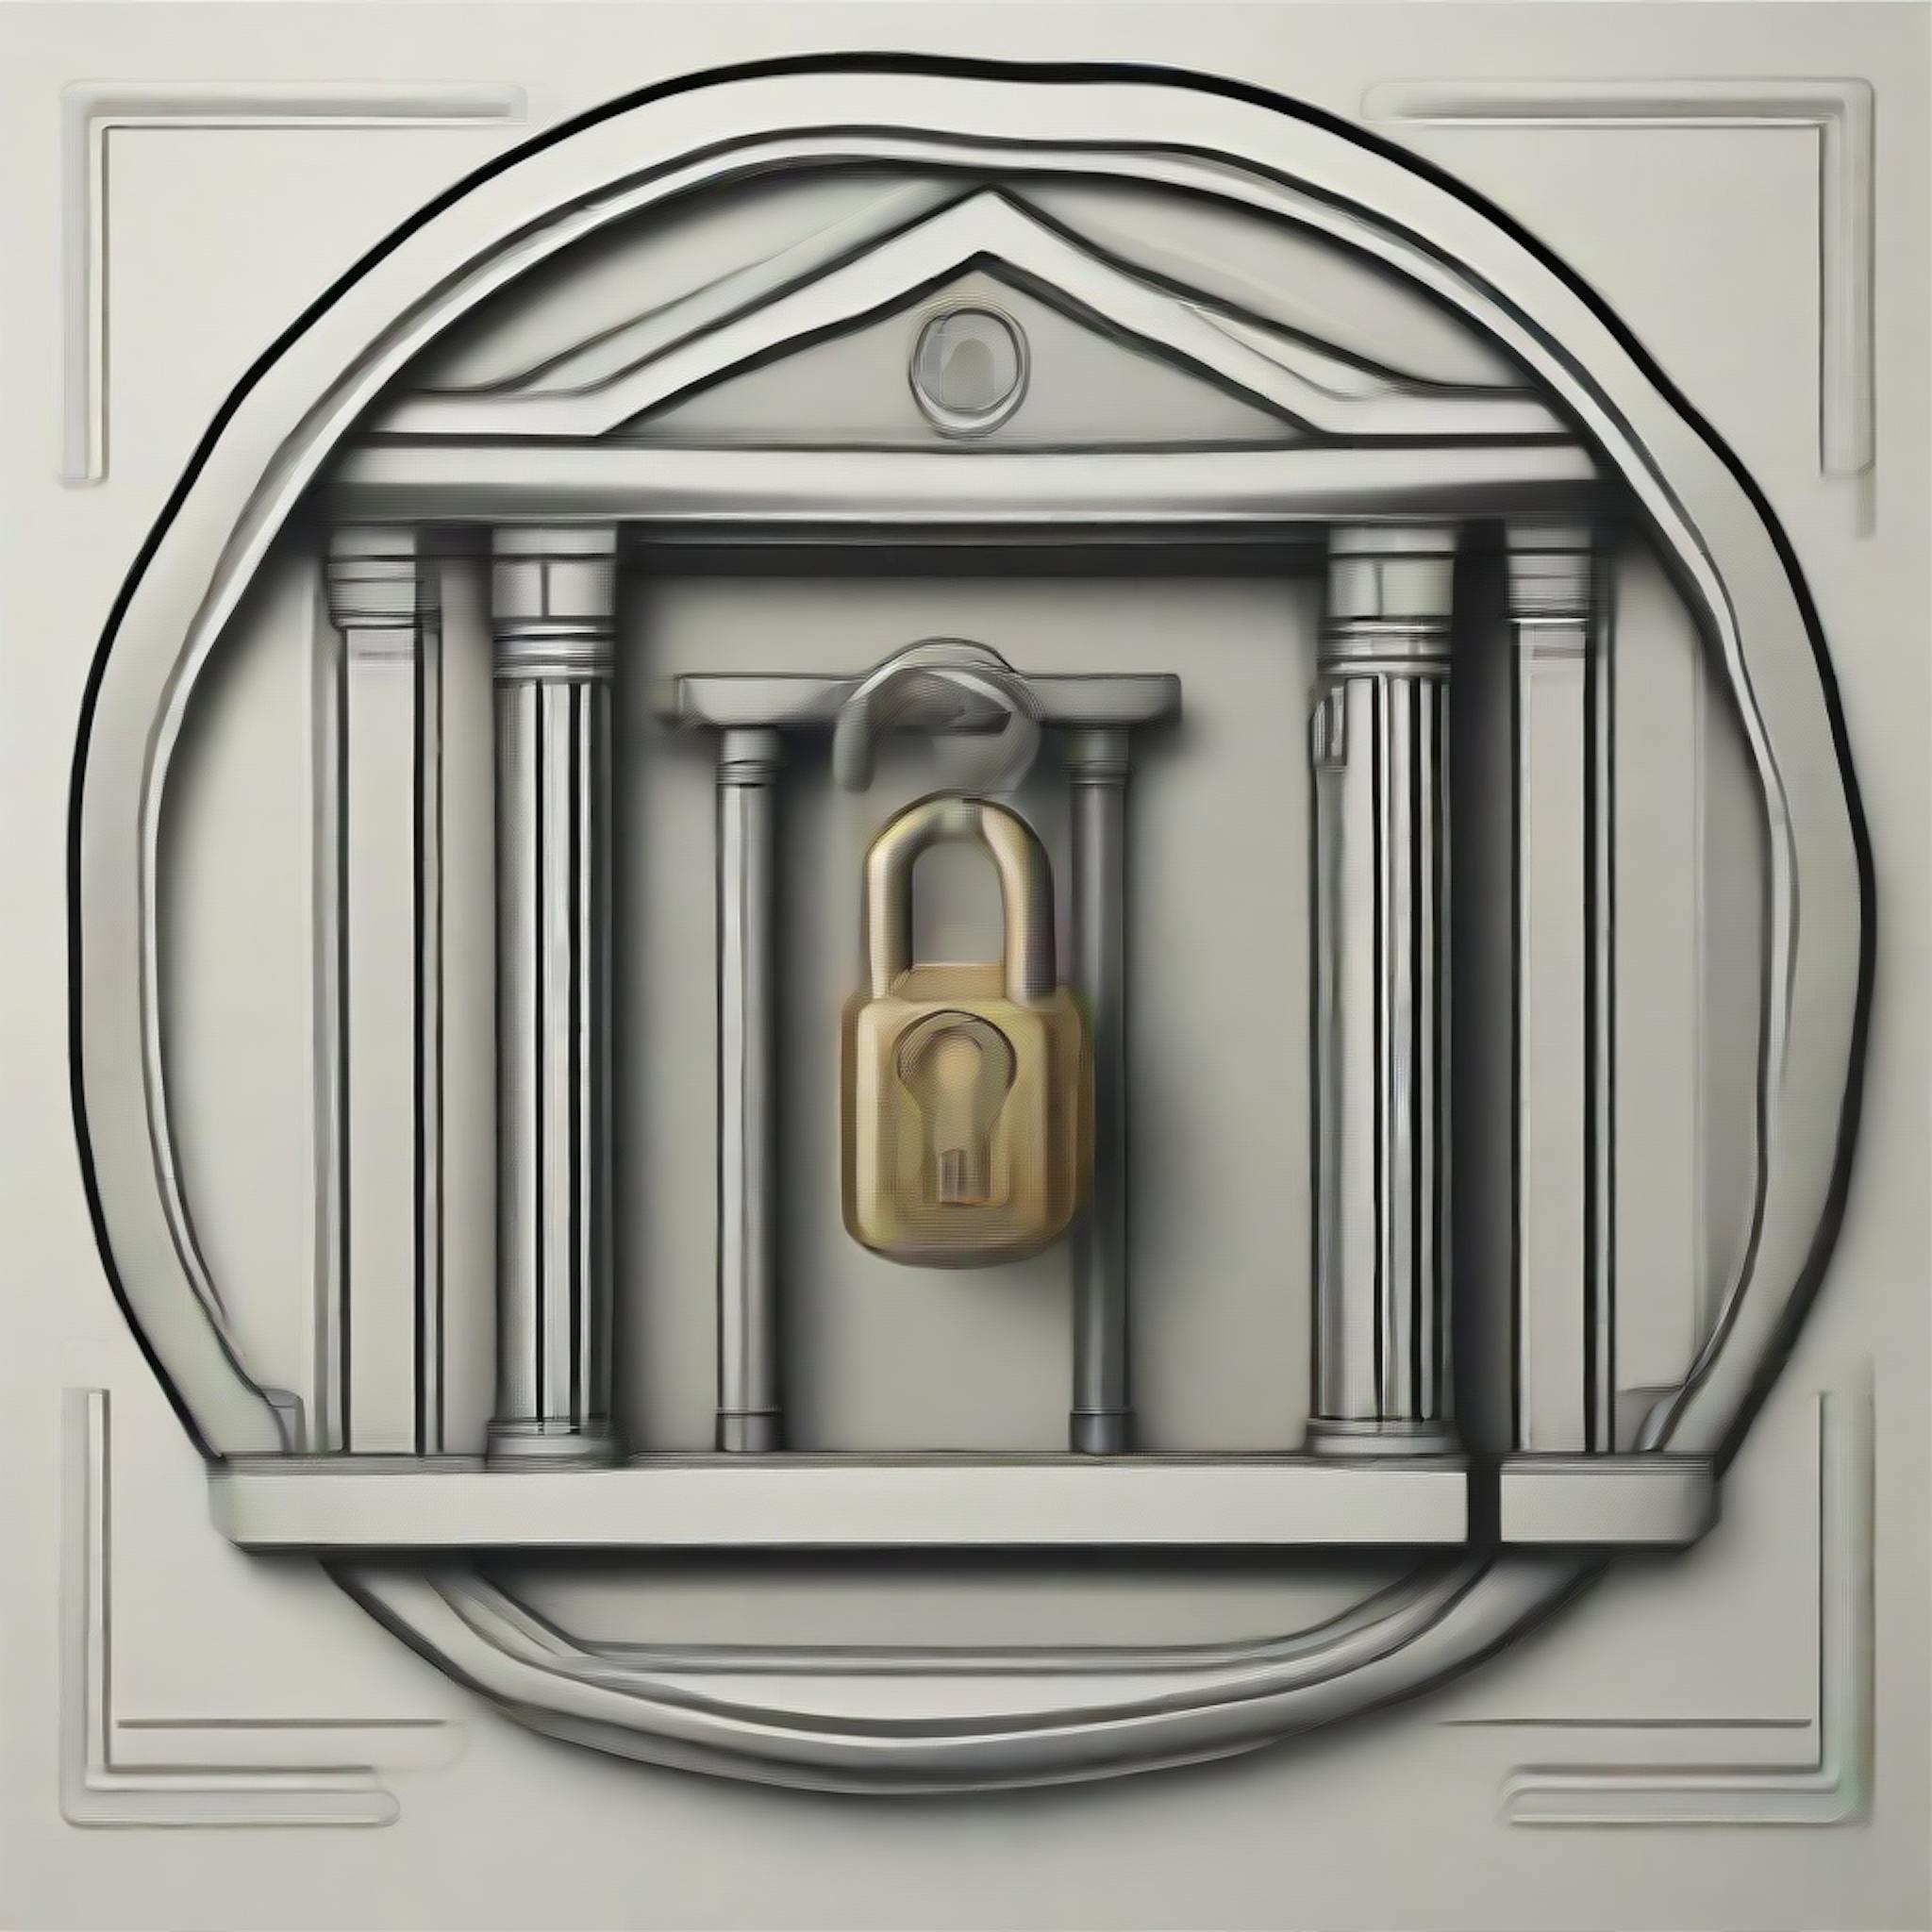 featured image - 銀行におけるクラウドセキュリティとは何ですか?